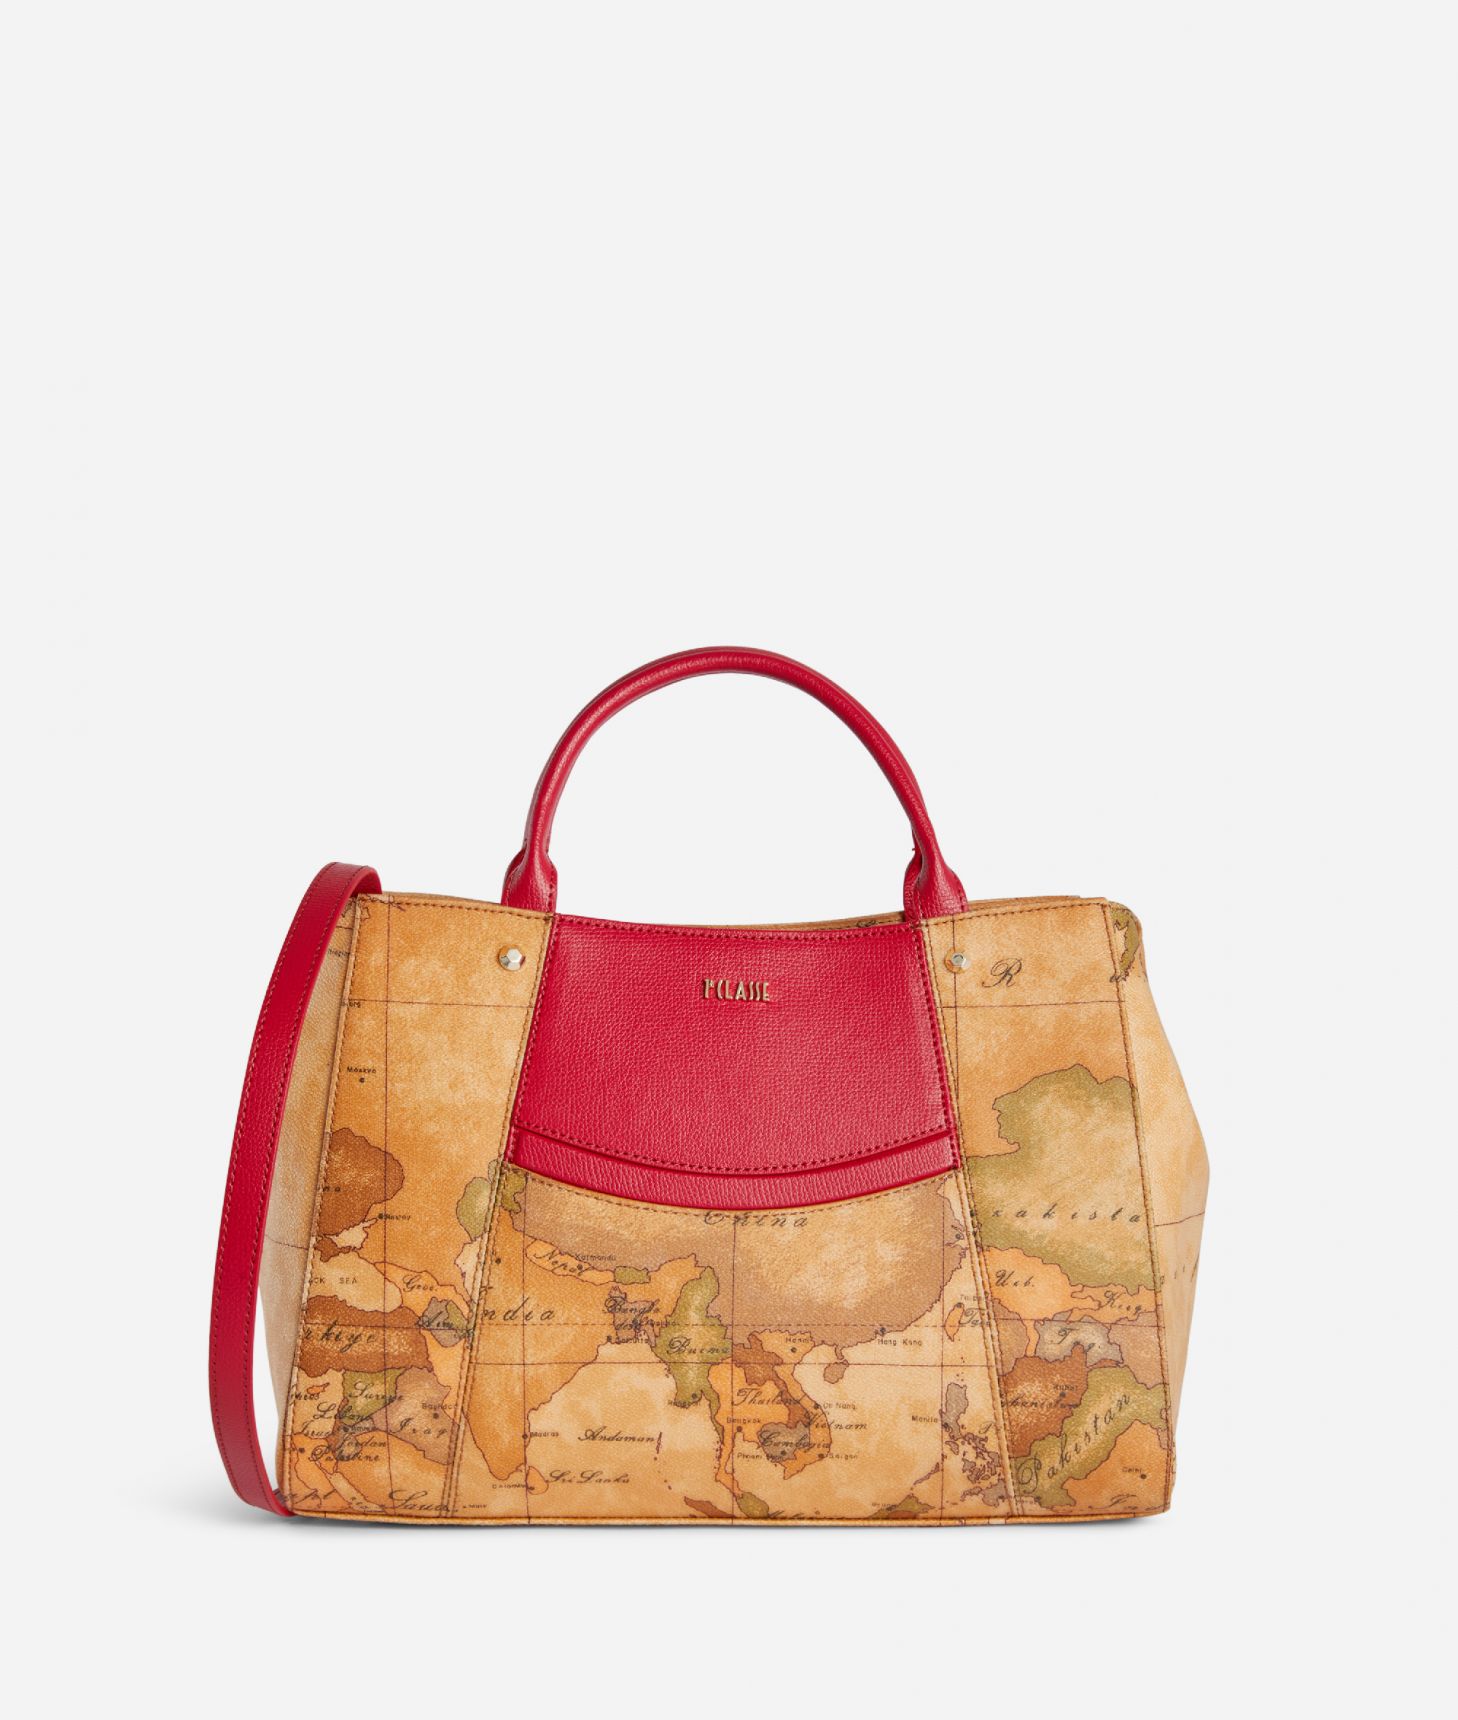 Geo Florence Handbag Cherry Red,front